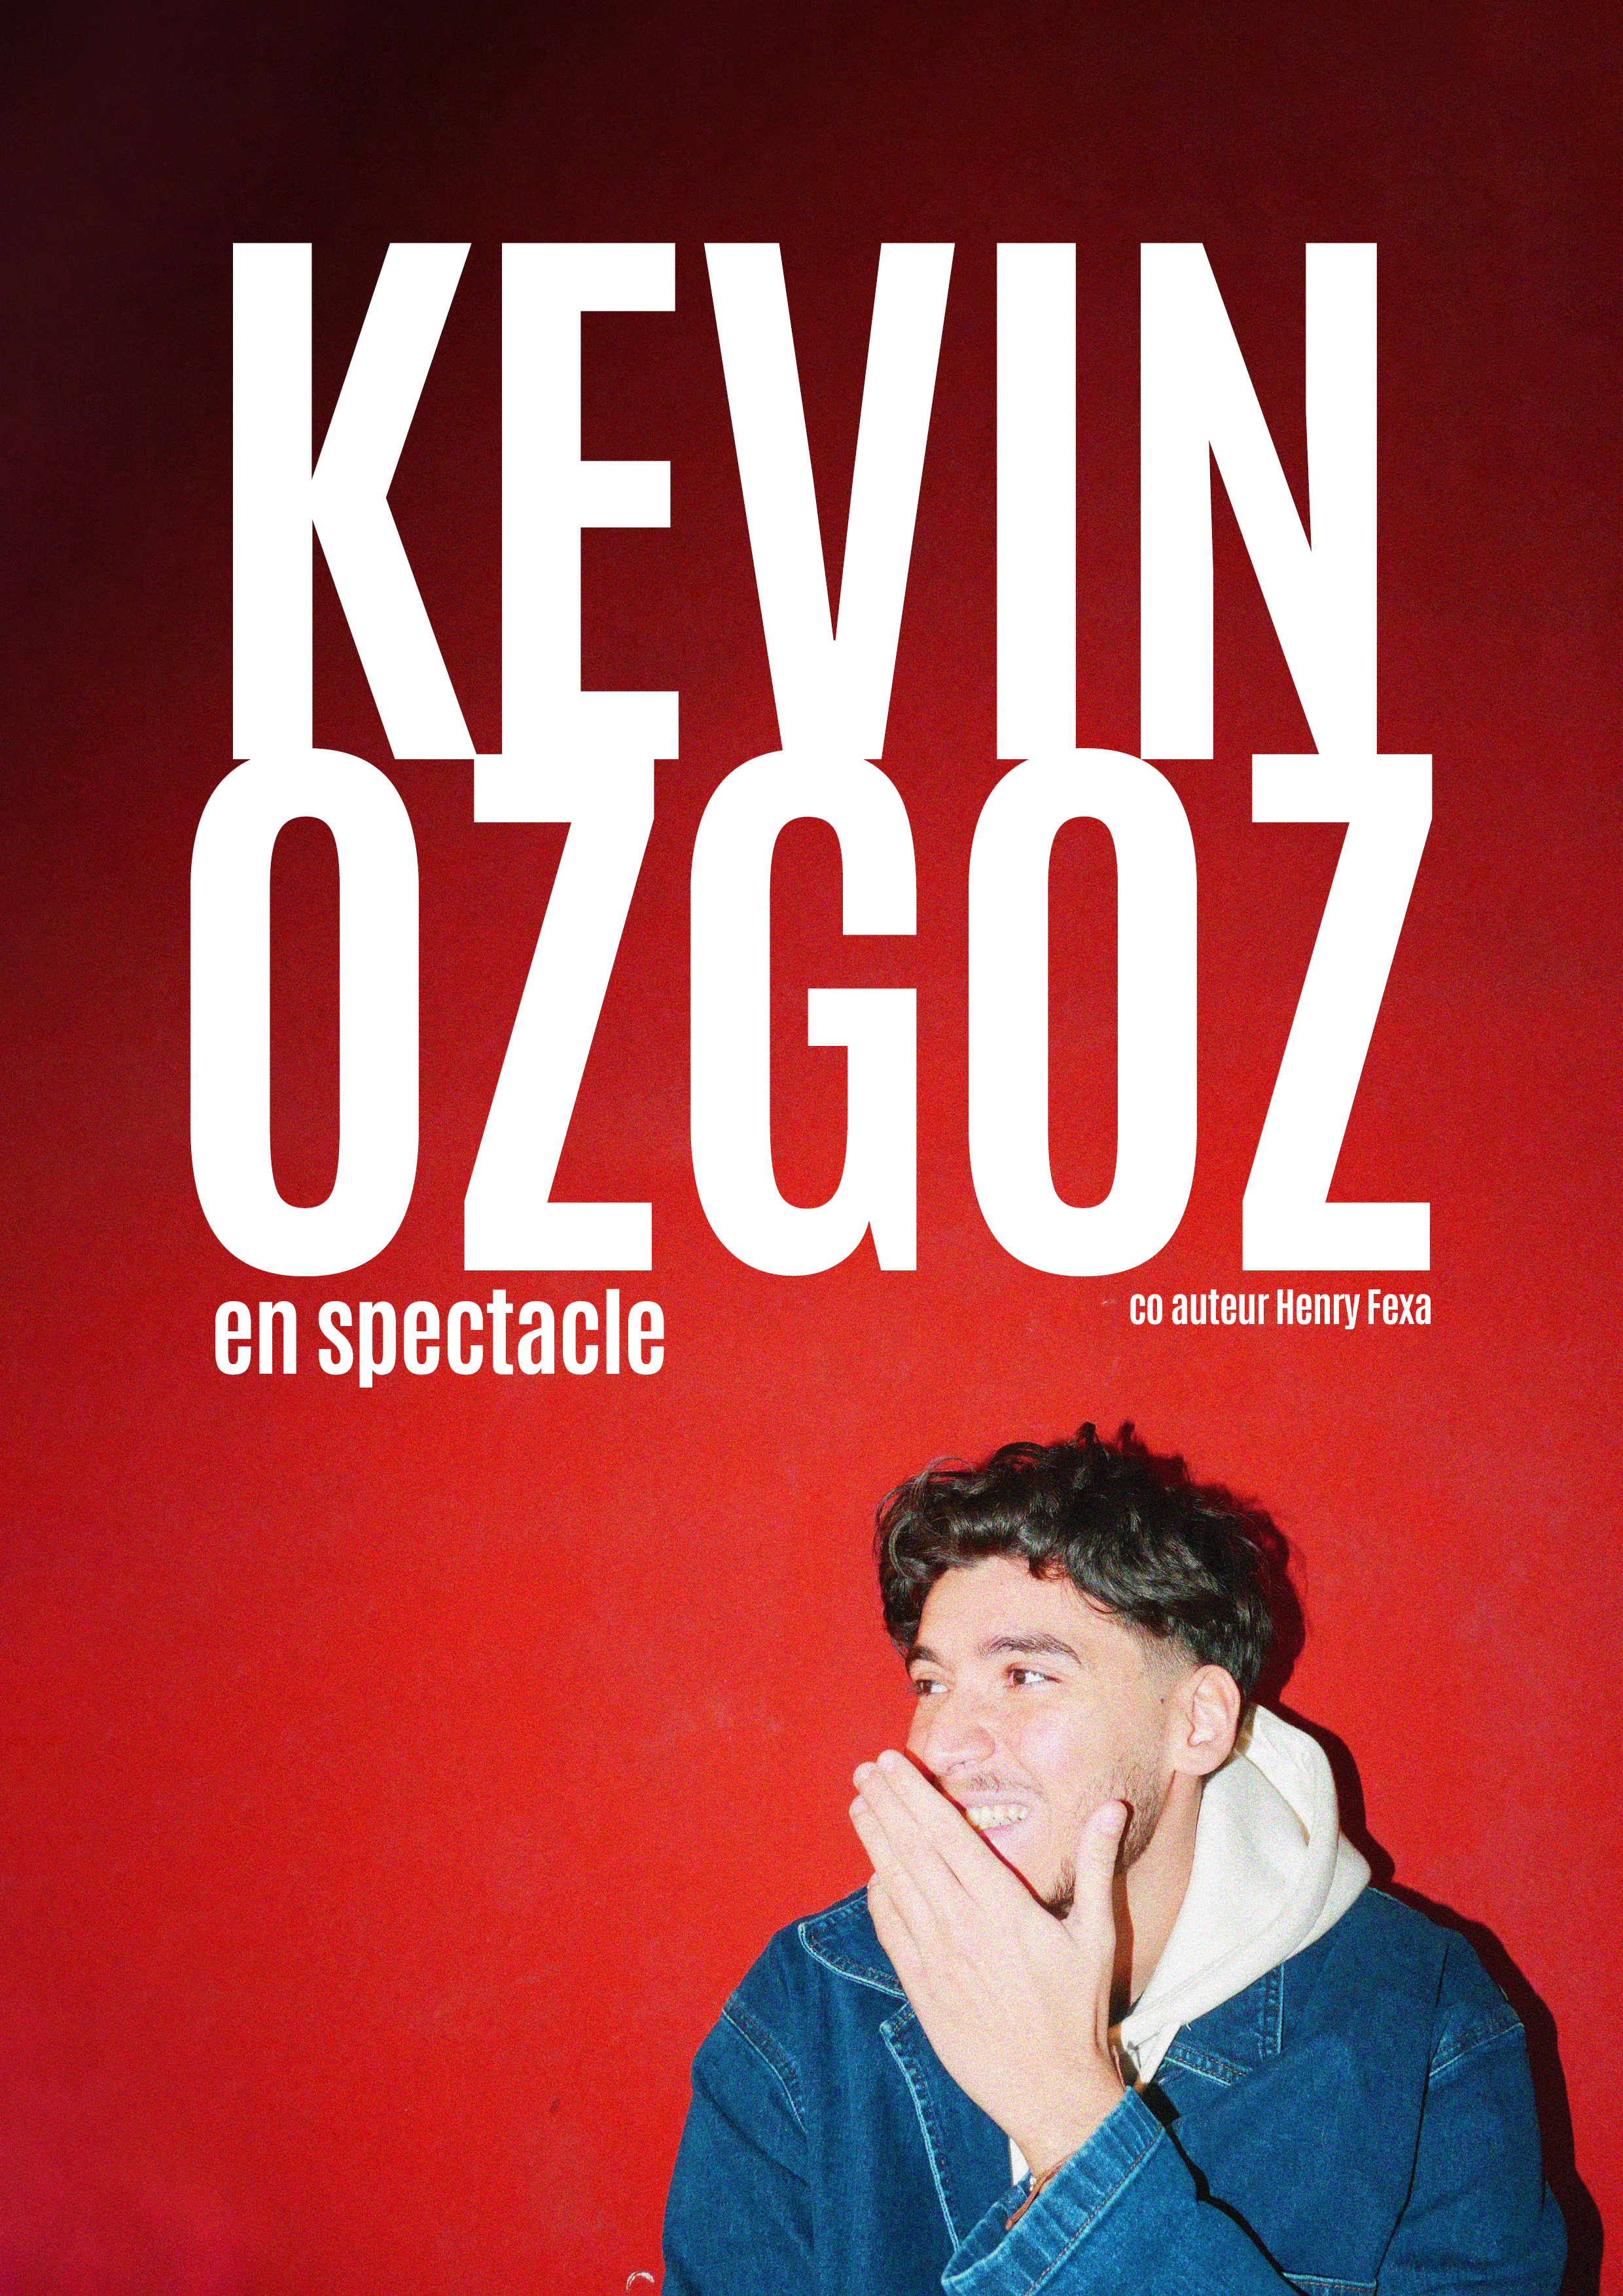 Kevin Ozgoz